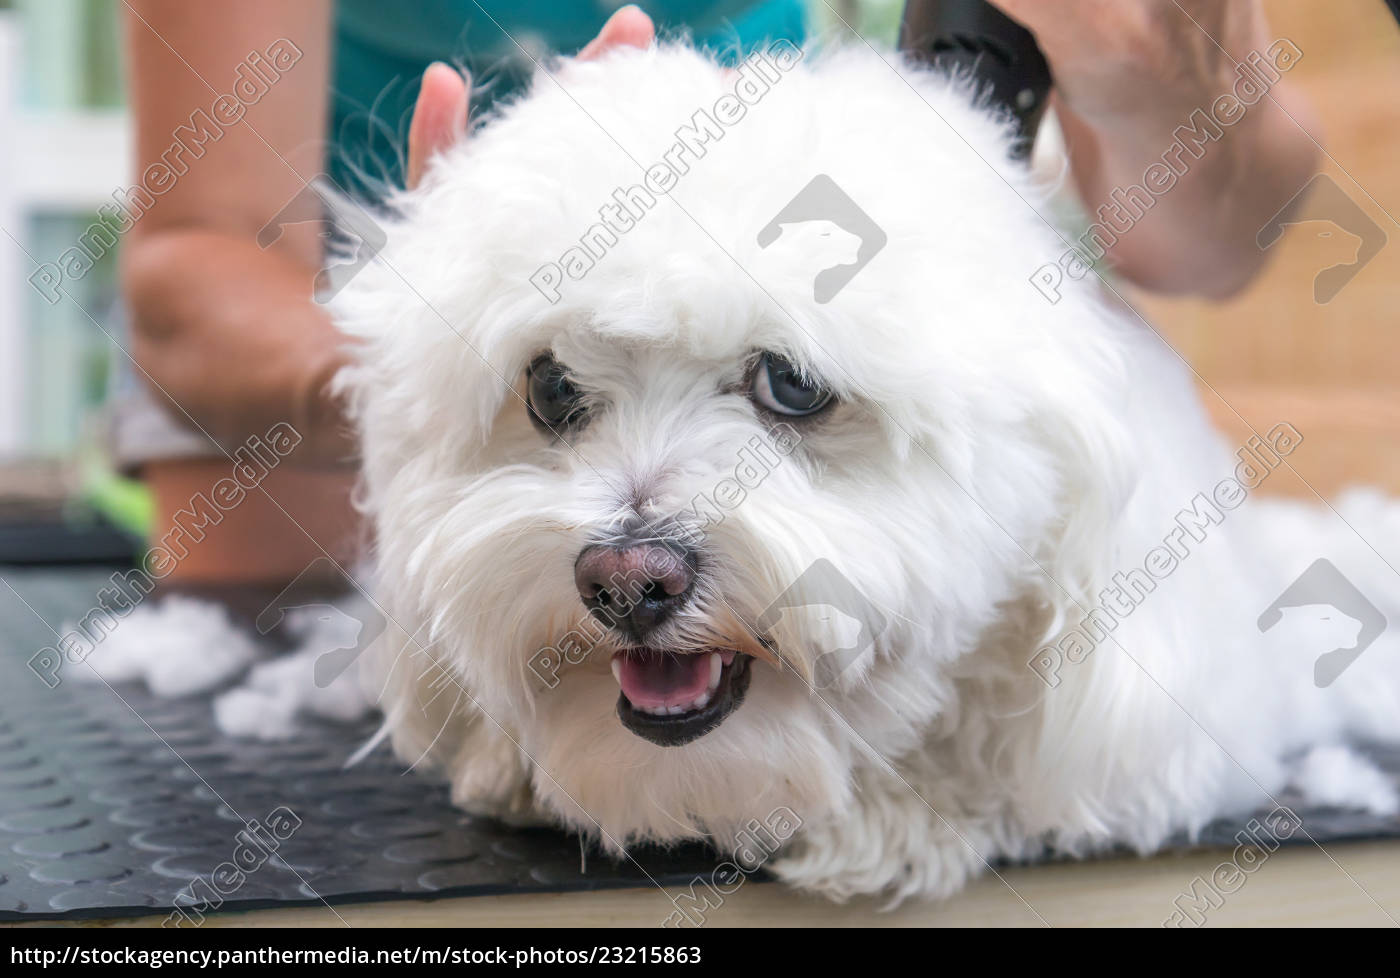 Bolognese hund grooming - Stockphoto #23215863 | PantherMedia Billedbureau